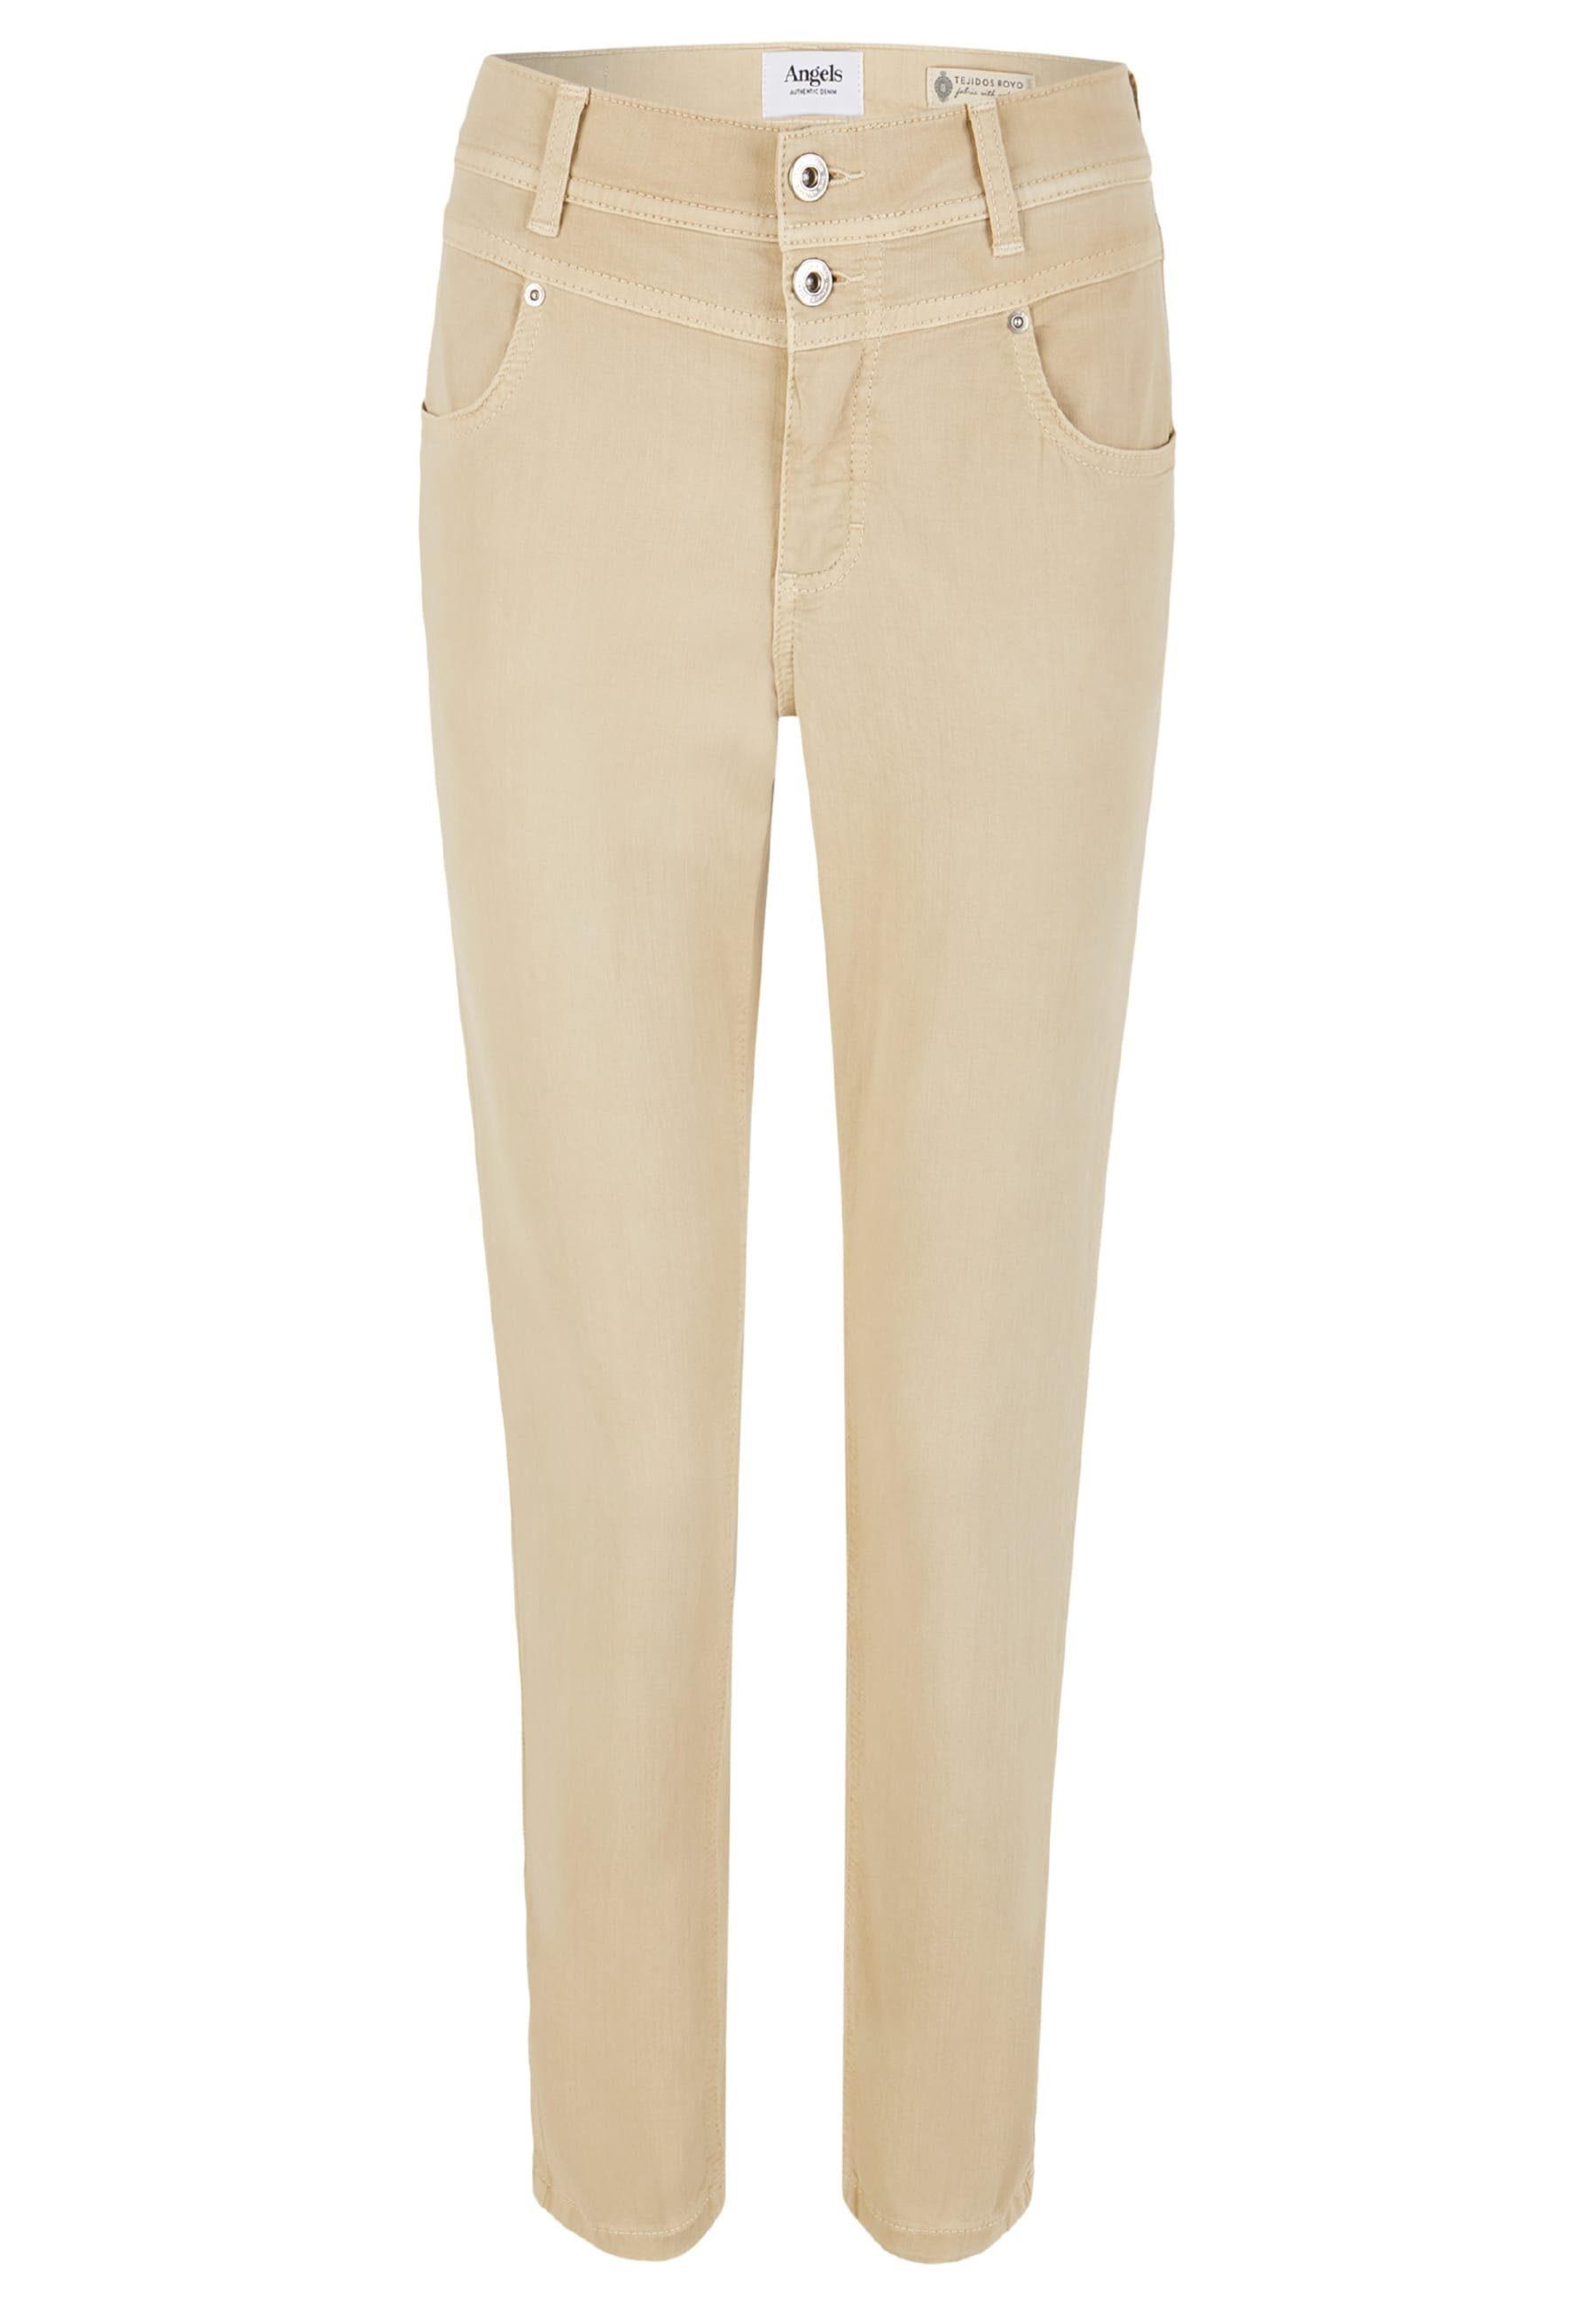 ANGELS 7/8-Jeans beige Ornella Button mit mit unifarbenem Label-Applikationen Jeans Stoff